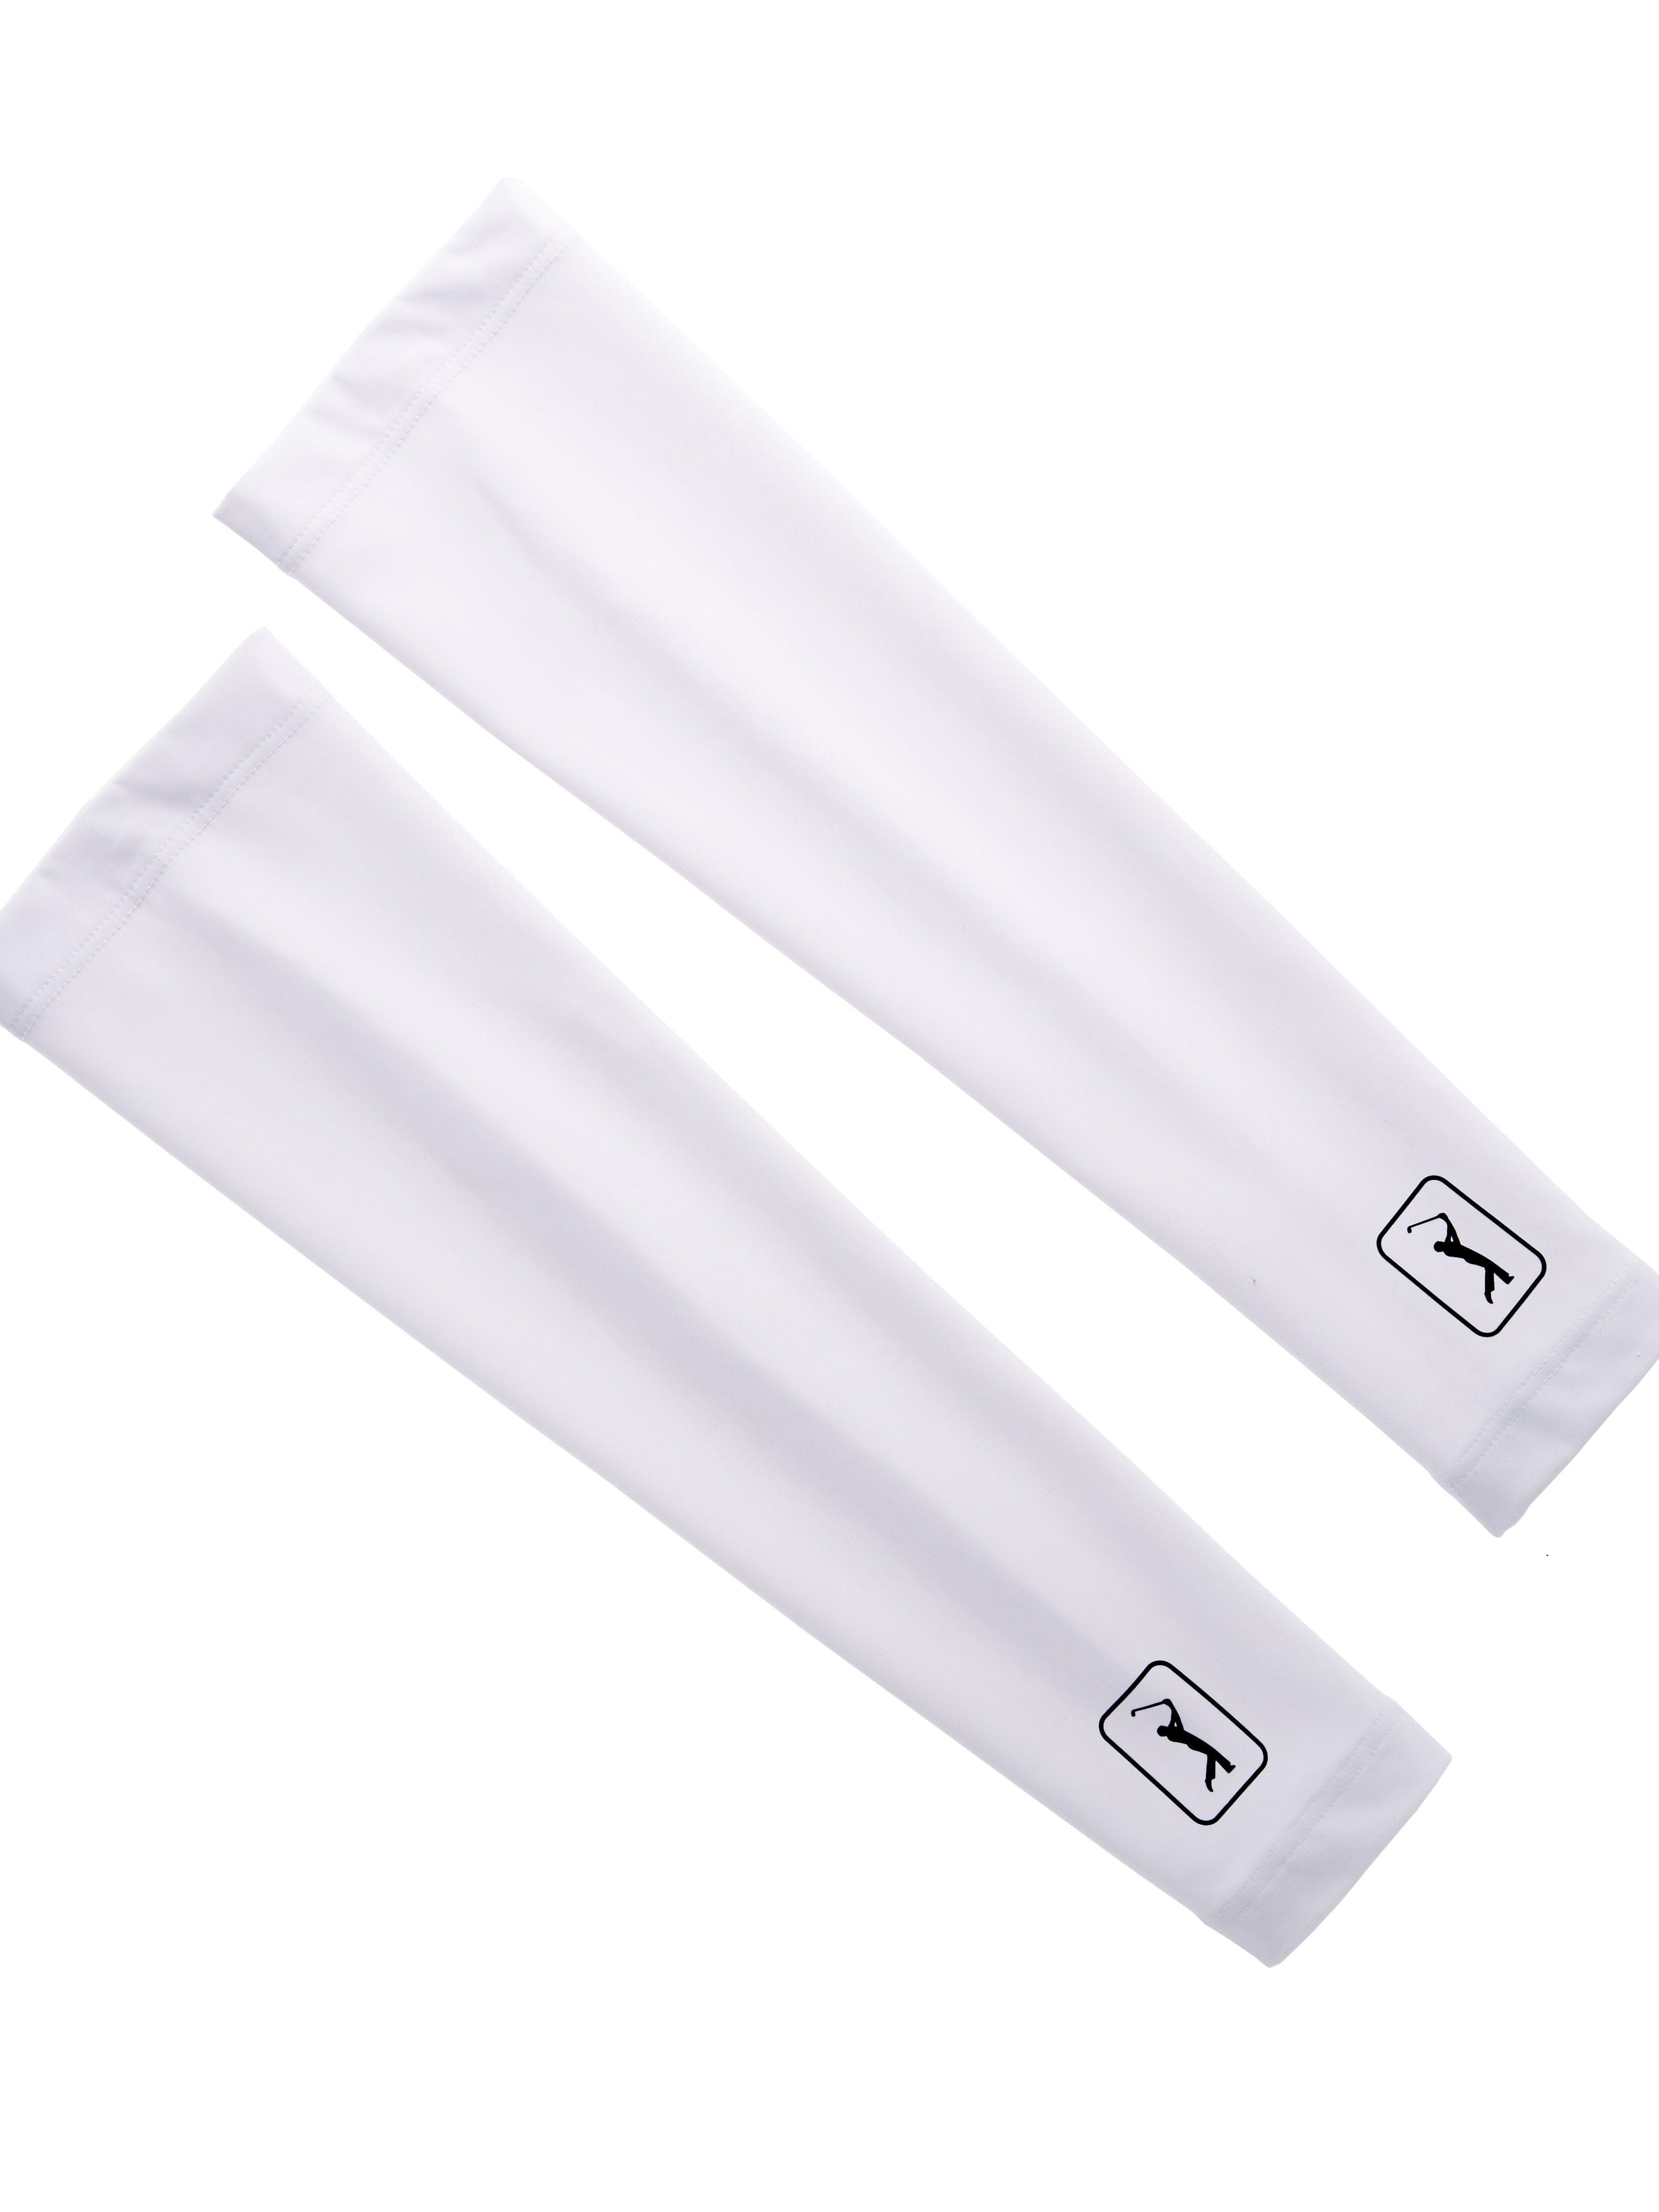 PGA TOUR Apparel Solar Block Arm Sleeves, Size Medium/Large, White, Nylon/Elastane | Golf Apparel Shop